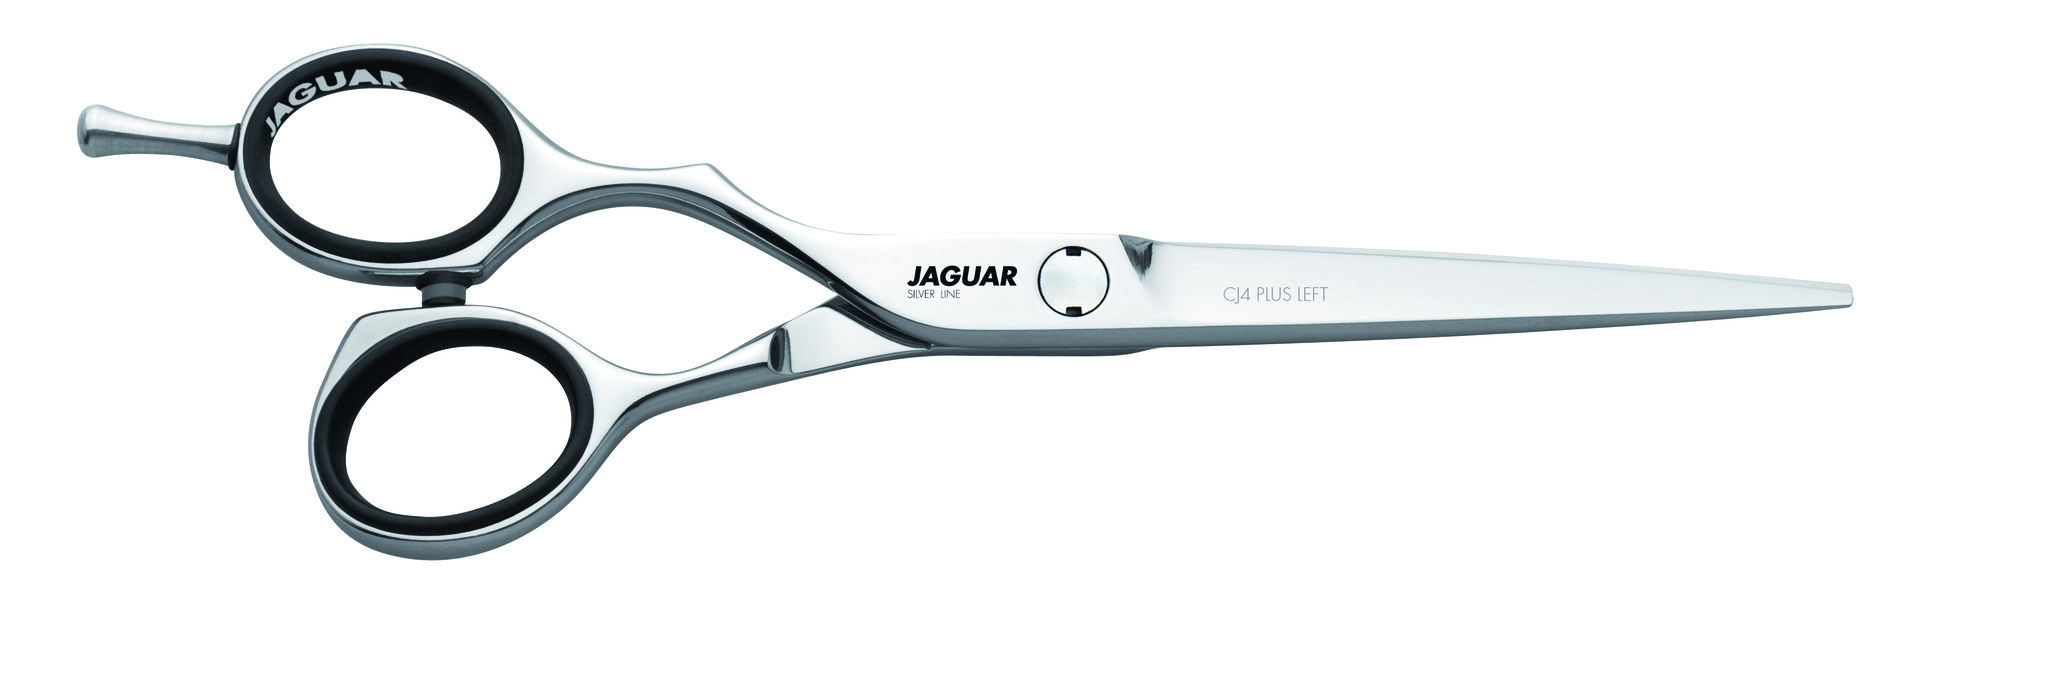 jaguar Silver Line CJ4 Plus Left